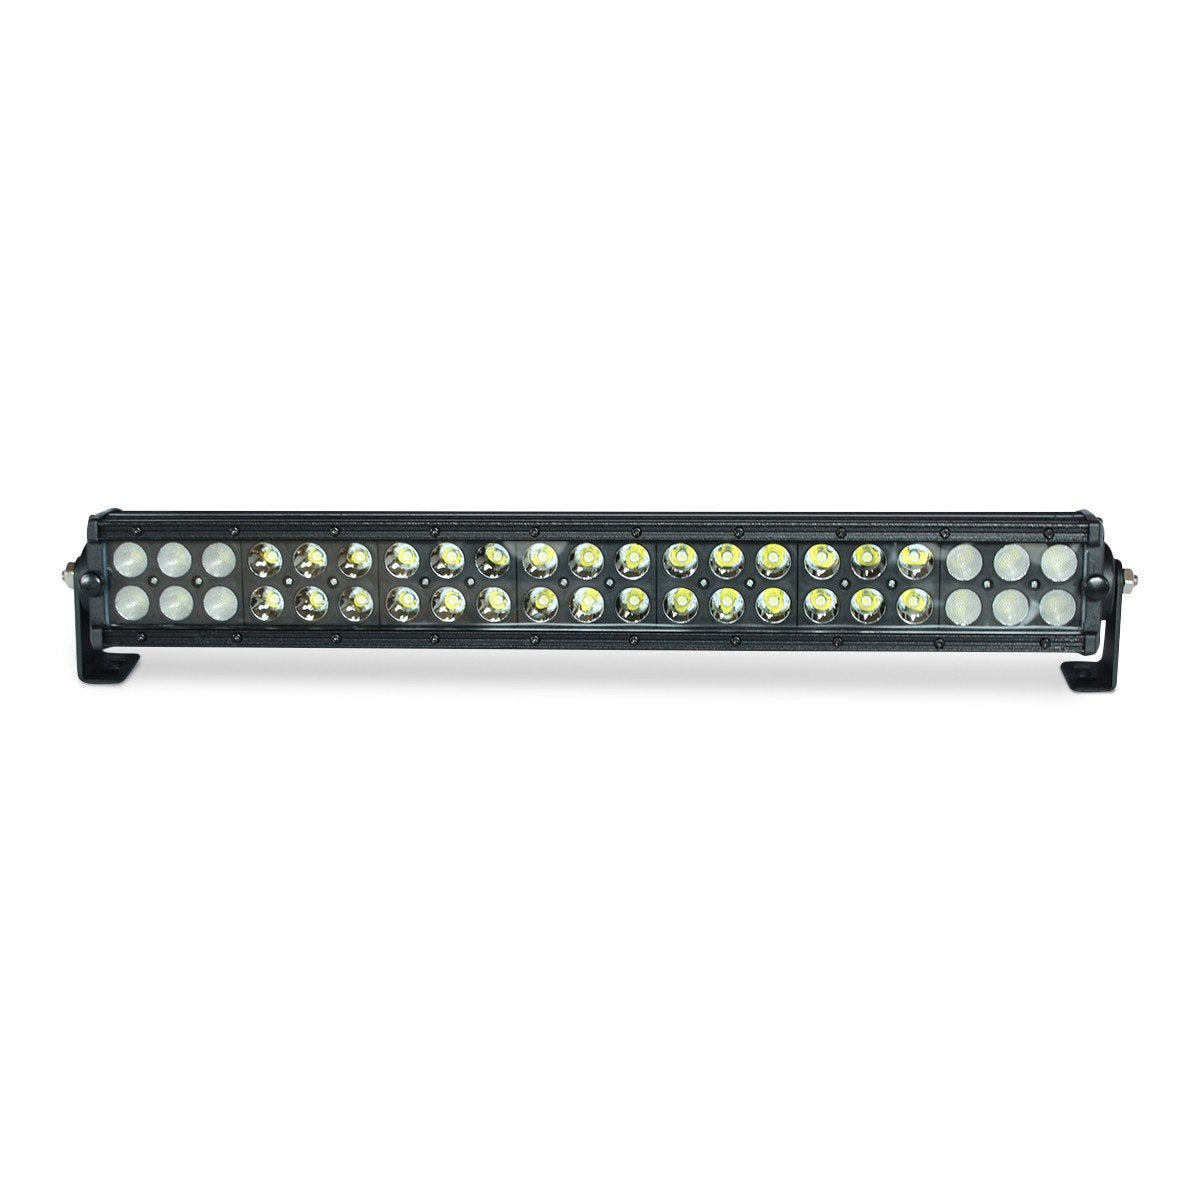 21"-Dual-Row-Black-Series-LED-Light-Bar